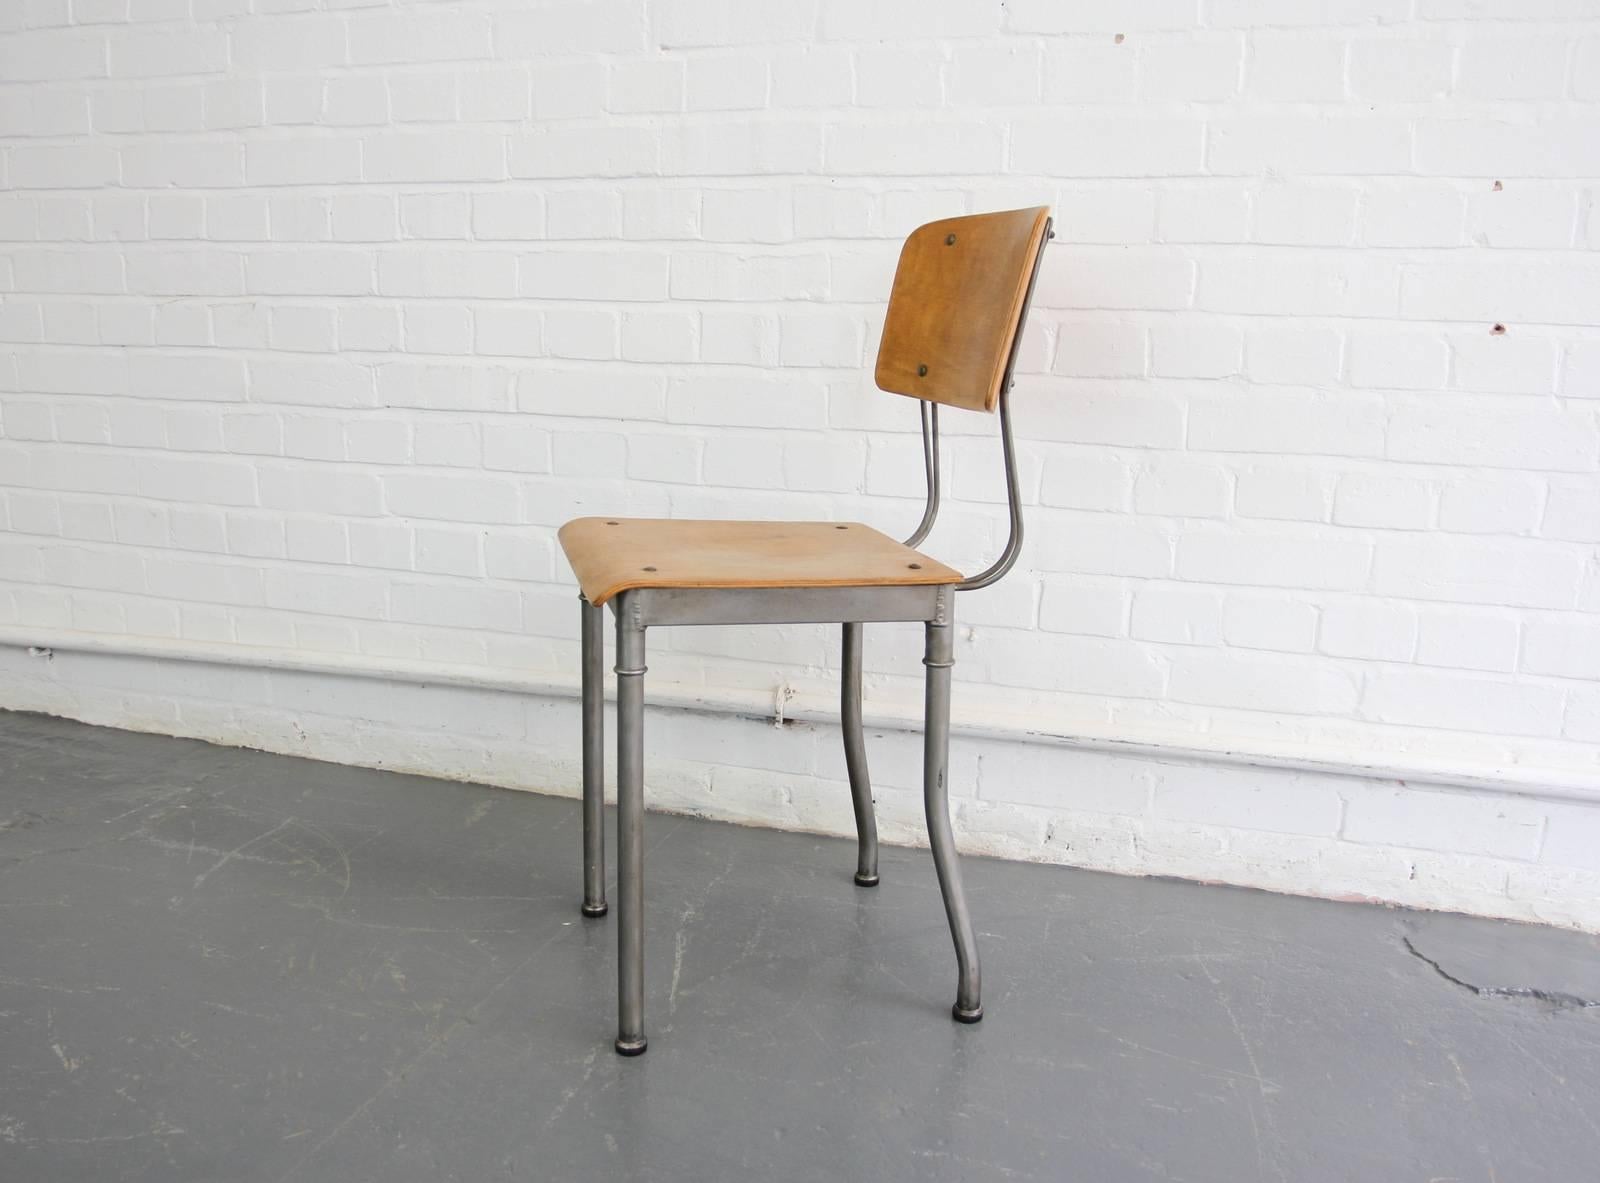 German Modernist Robert Wagner Rowac Prototype Industrial Chair, circa 1920s